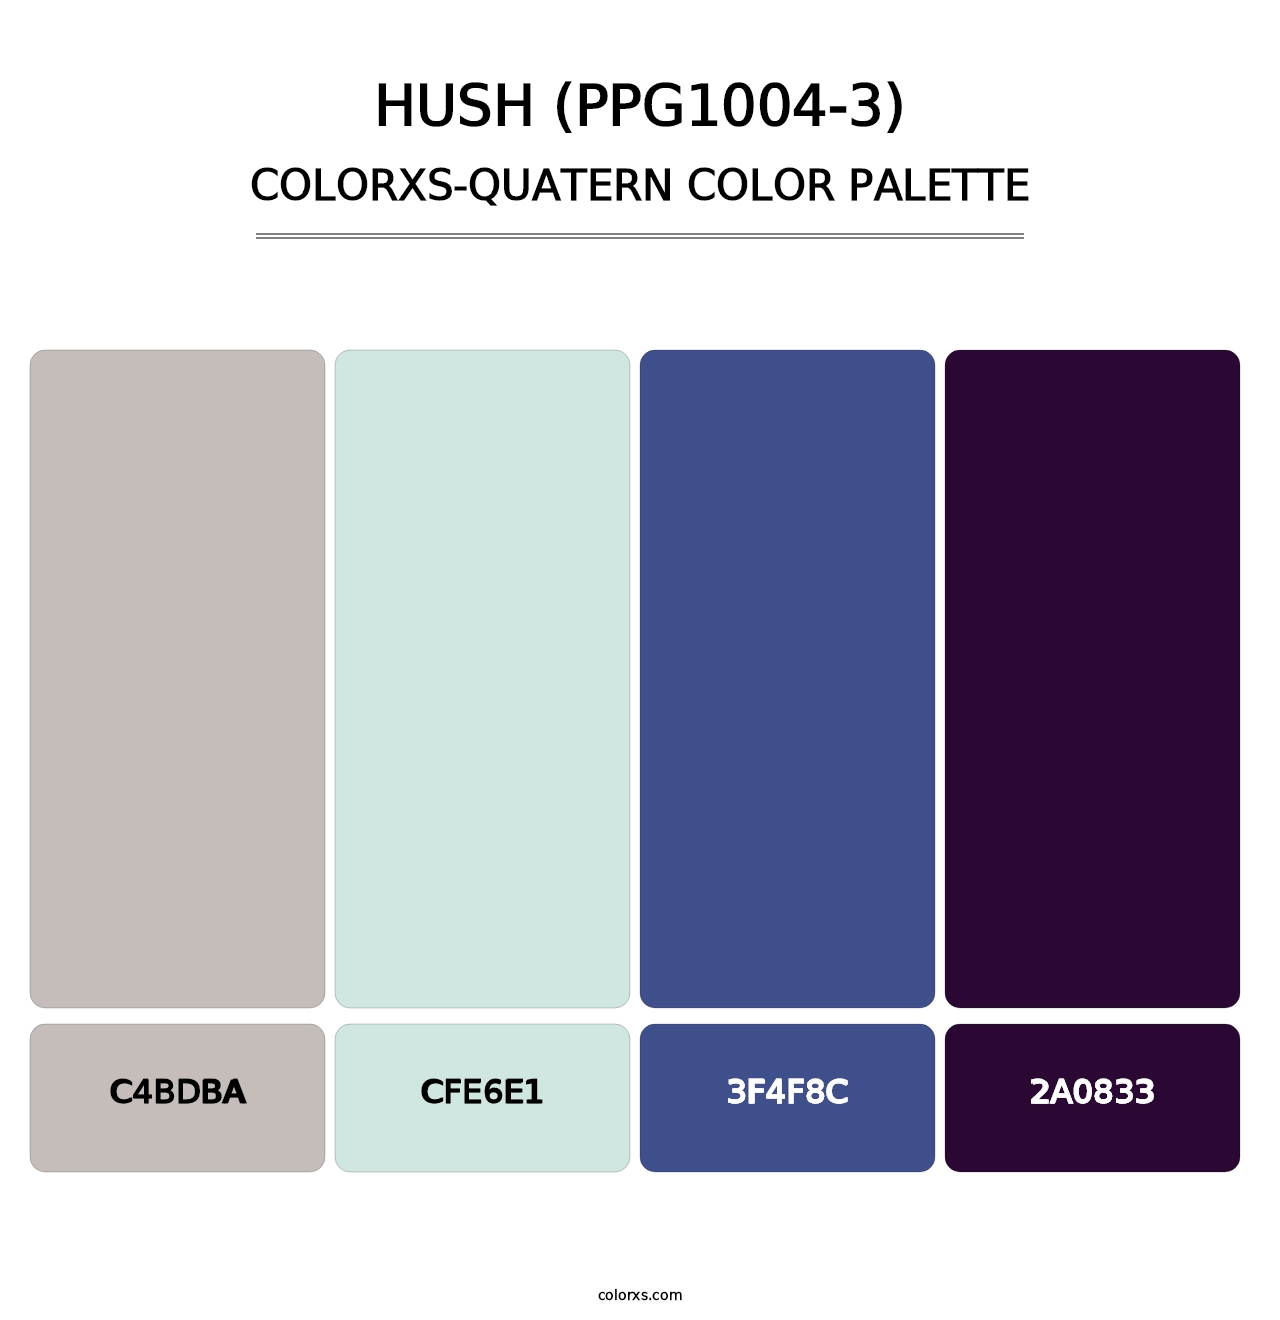 Hush (PPG1004-3) - Colorxs Quatern Palette